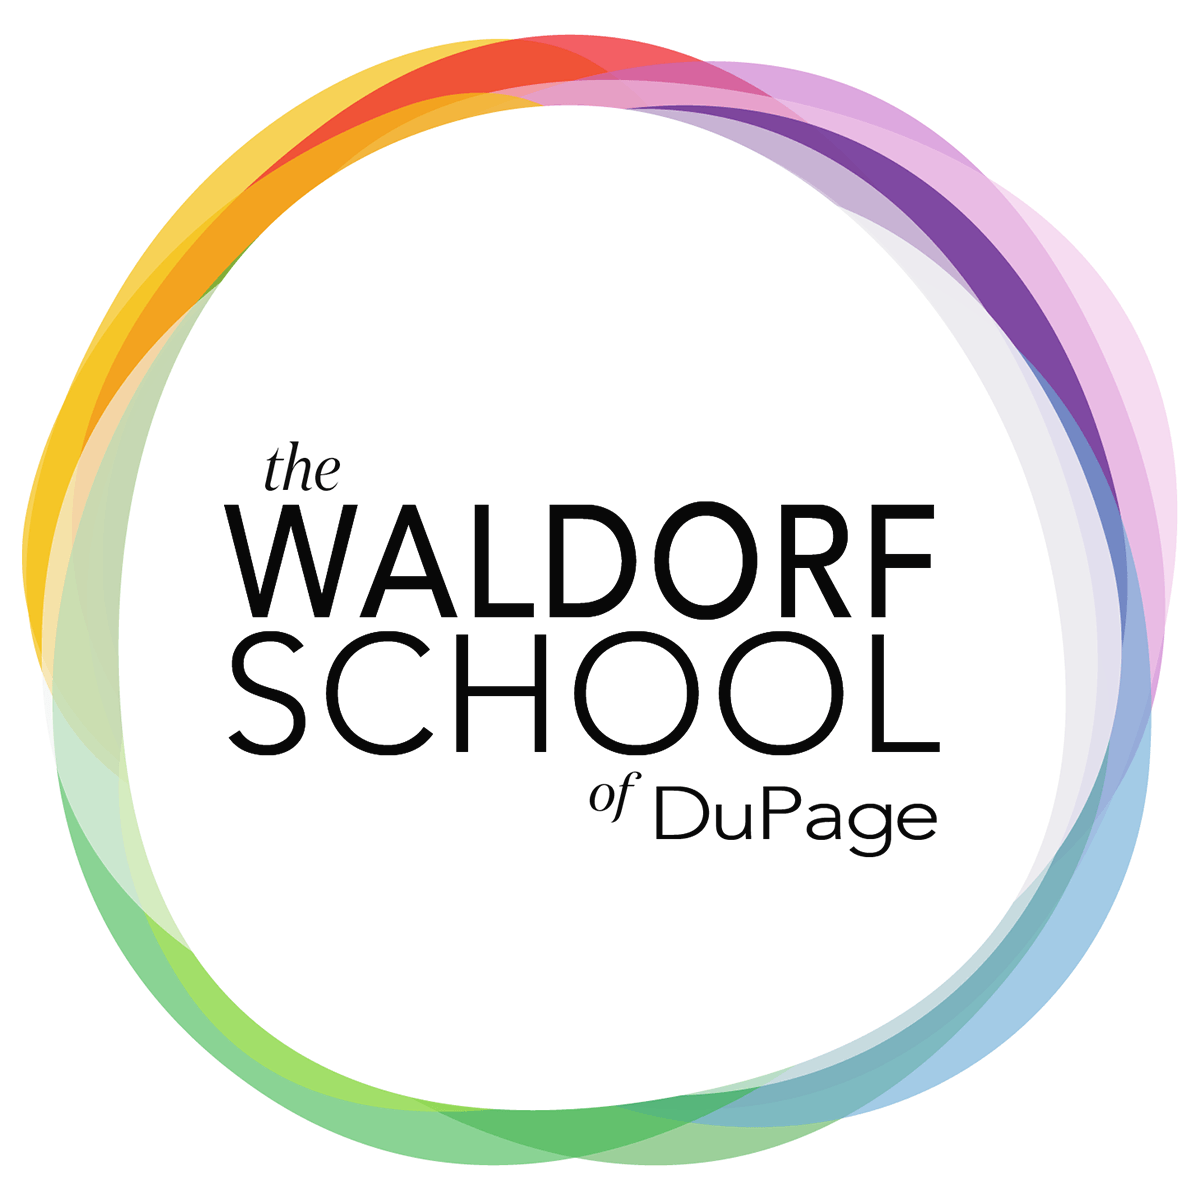 Waldorf School_DuPage_Resized.png